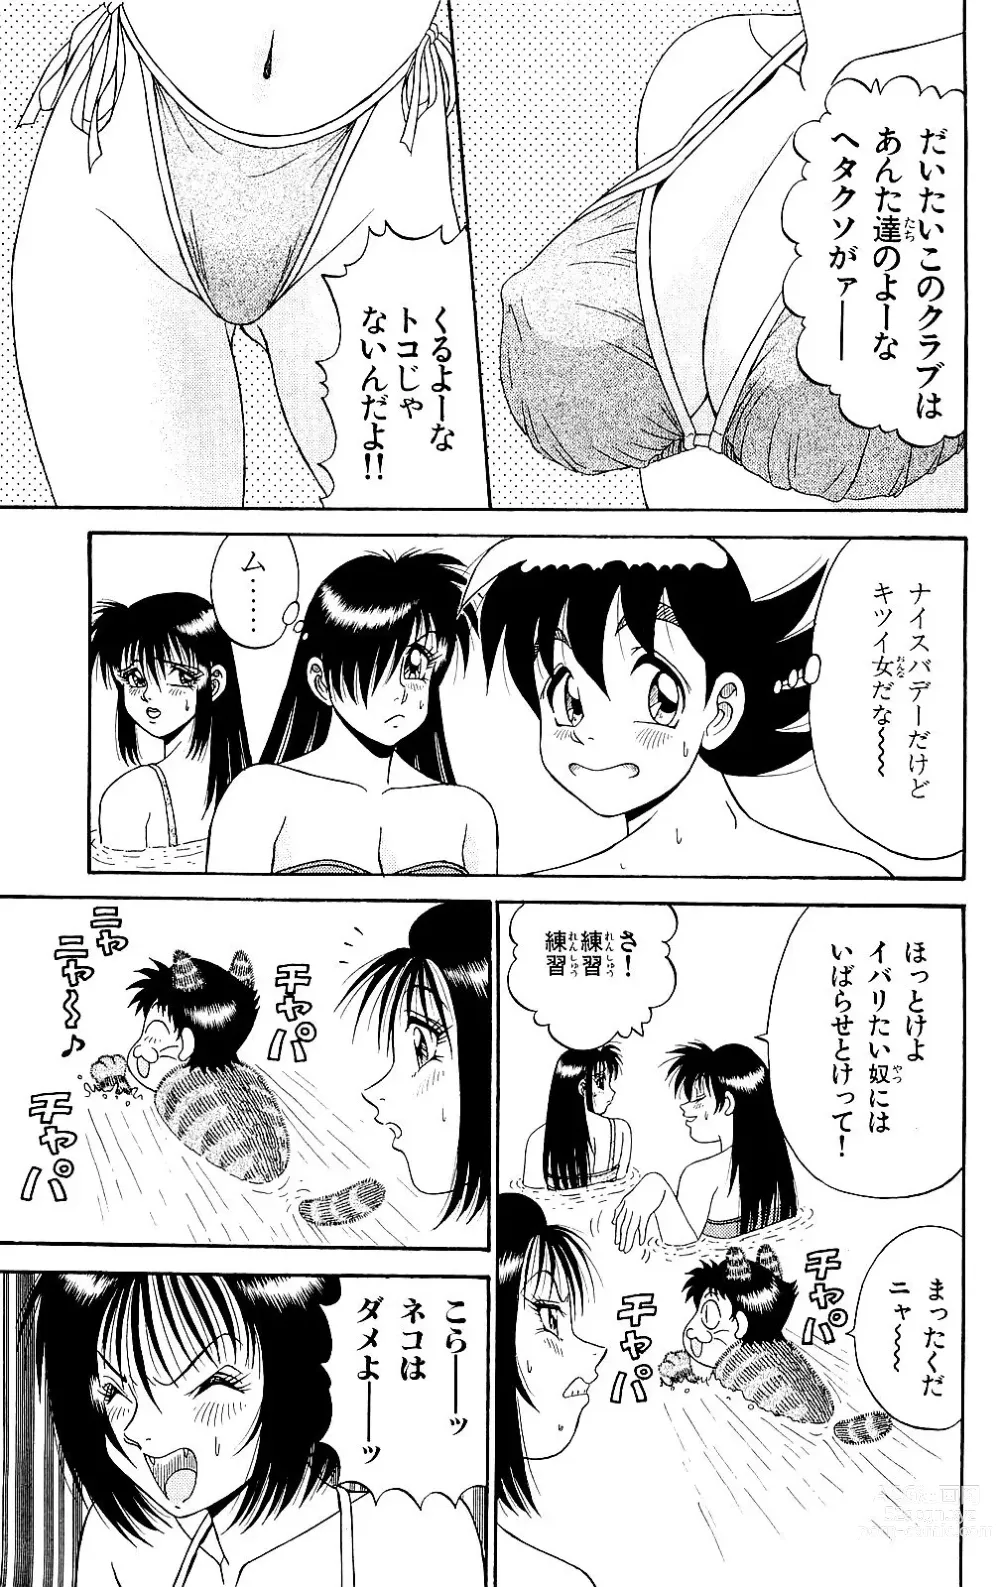 Page 19 of manga Orette Piyoritan 06